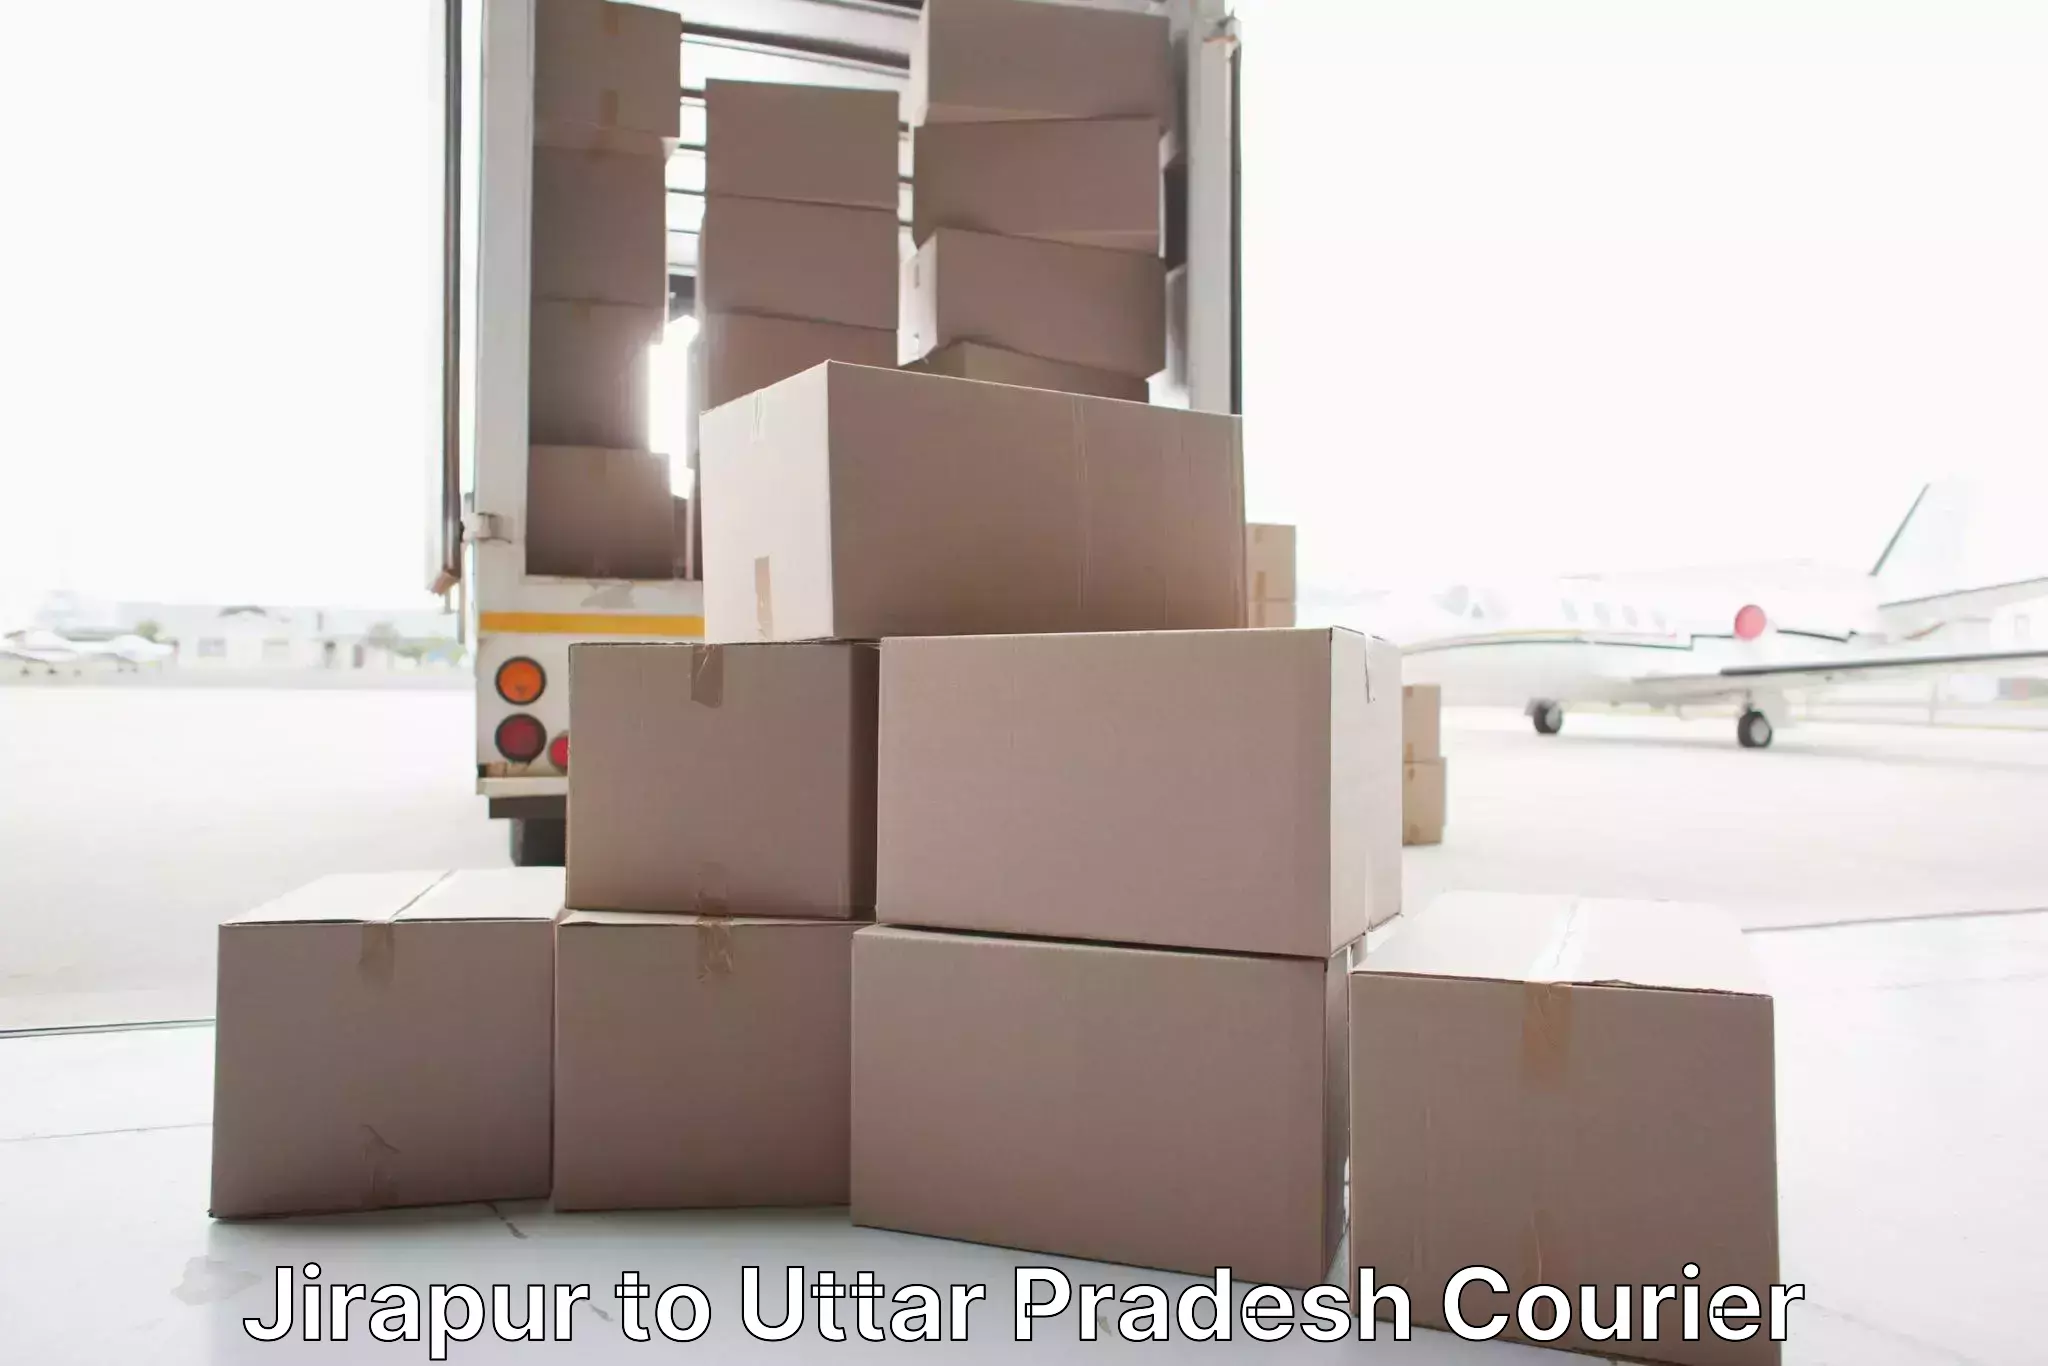 Hassle-free relocation Jirapur to Vrindavan